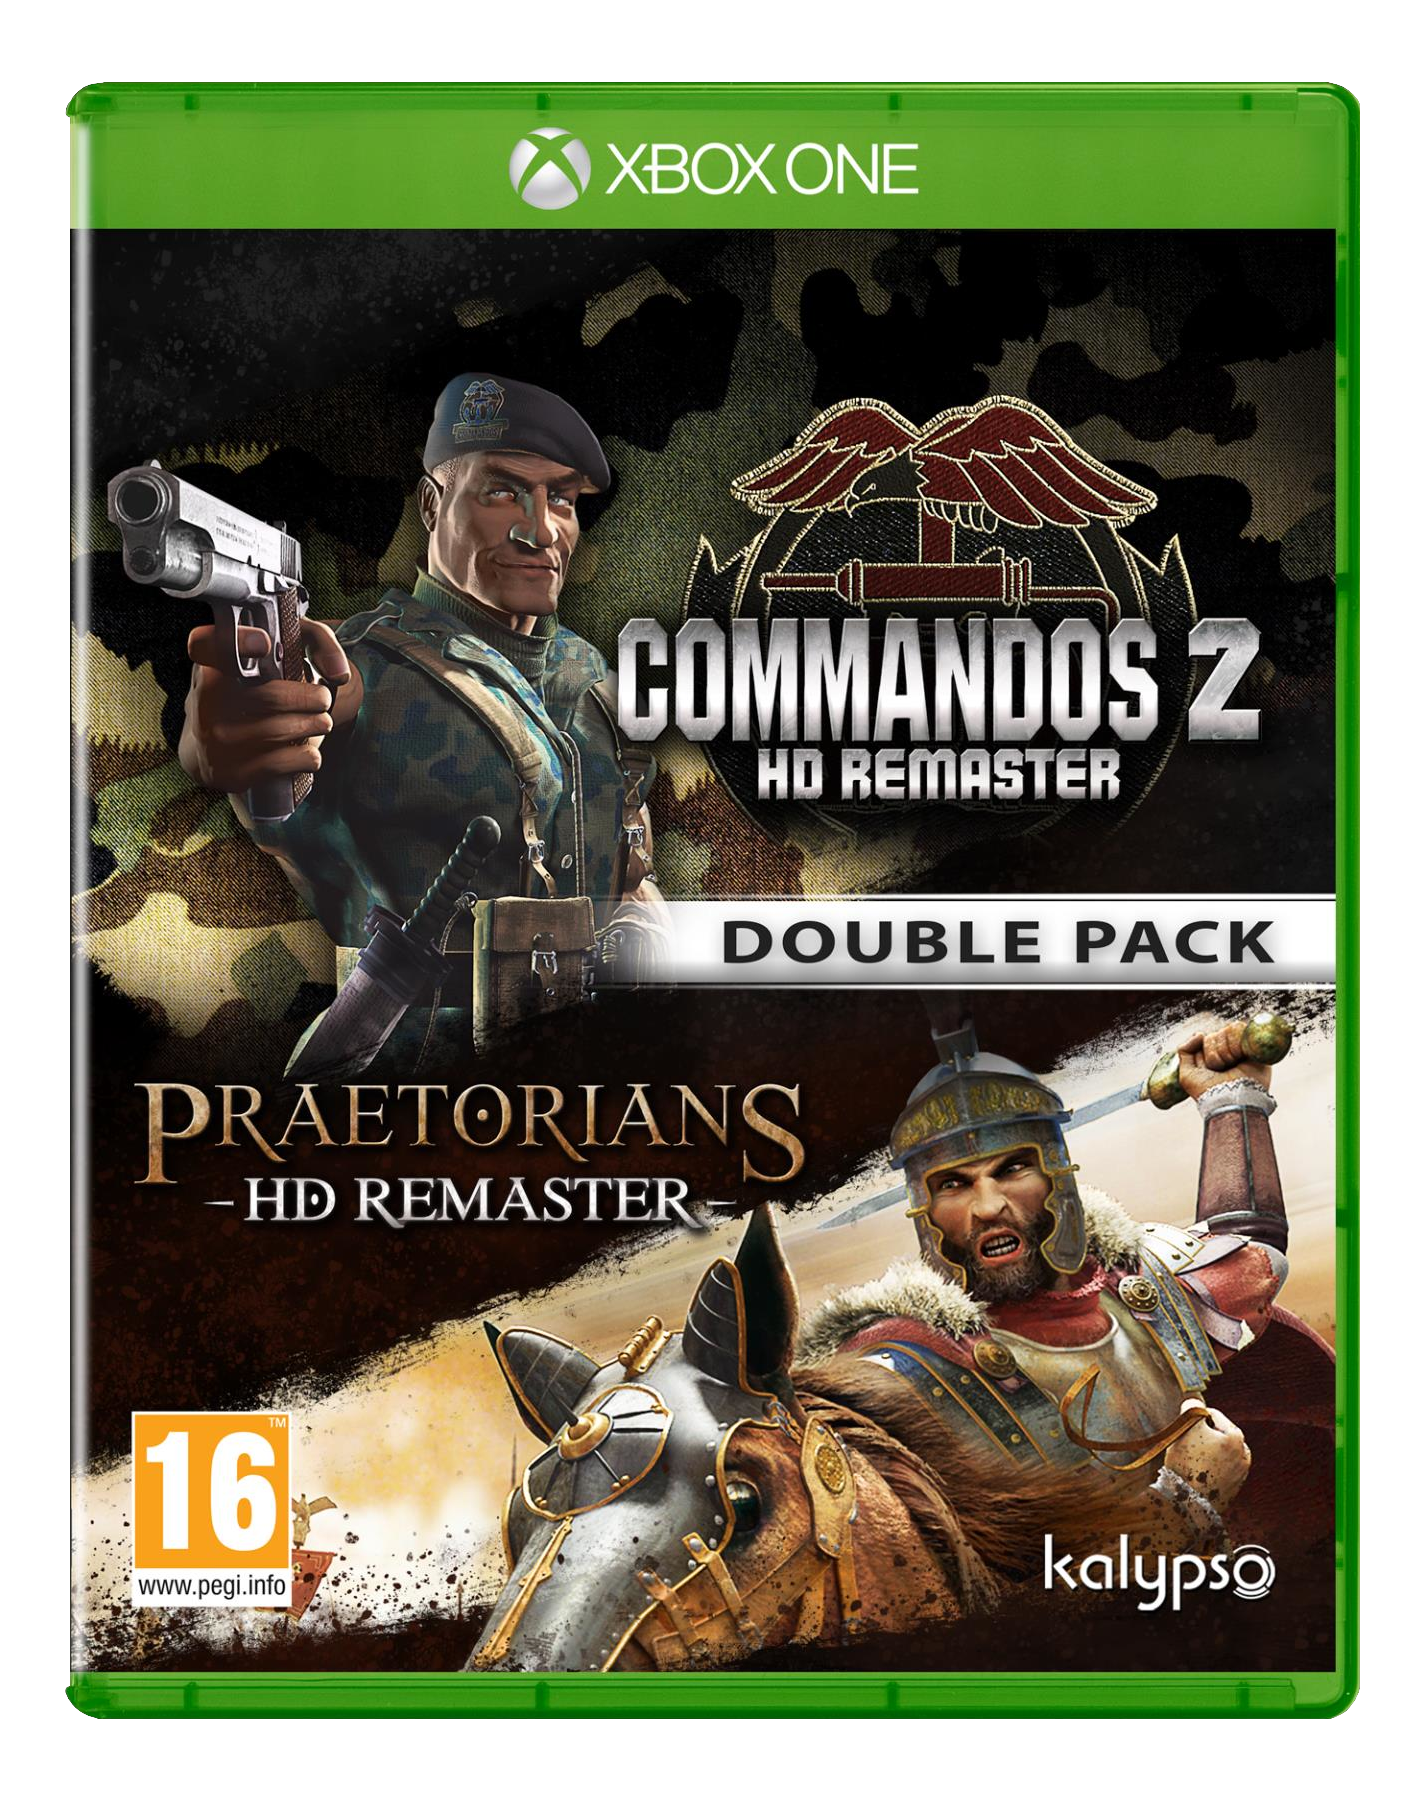 Commandos 2 & Praetorians: HD Remaster Double Pack - Xbox One - Italiano